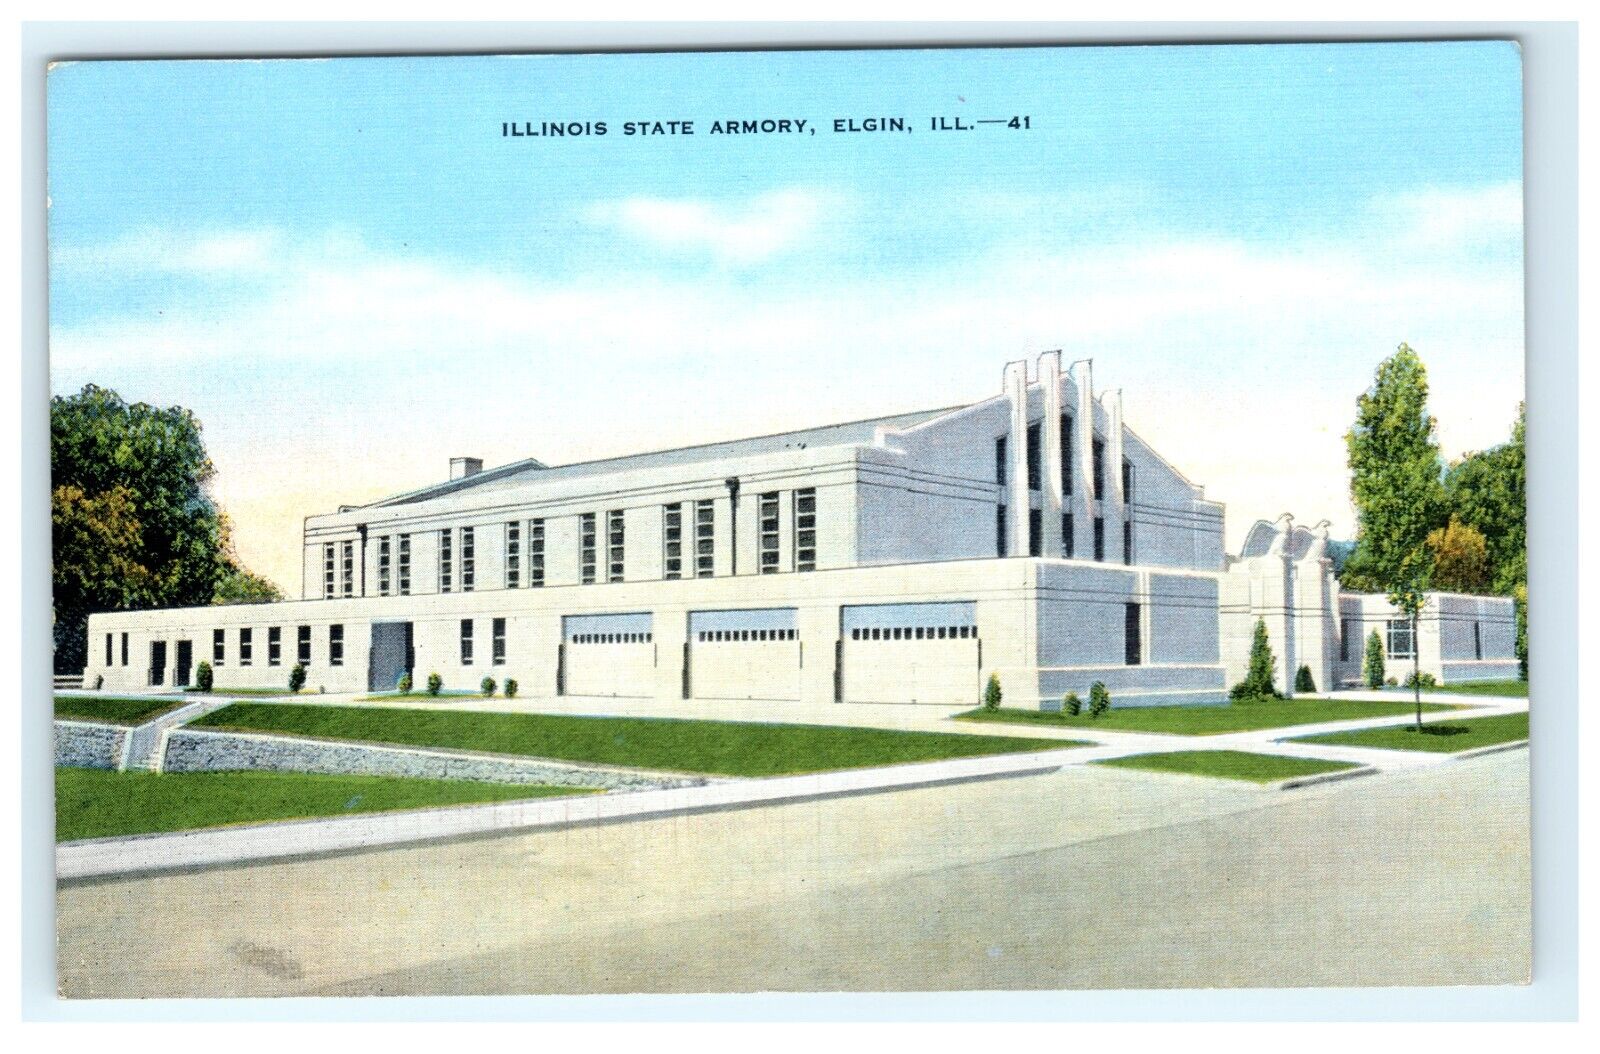 Illinois State Armory Elgin IL, Illinois Early Postcard